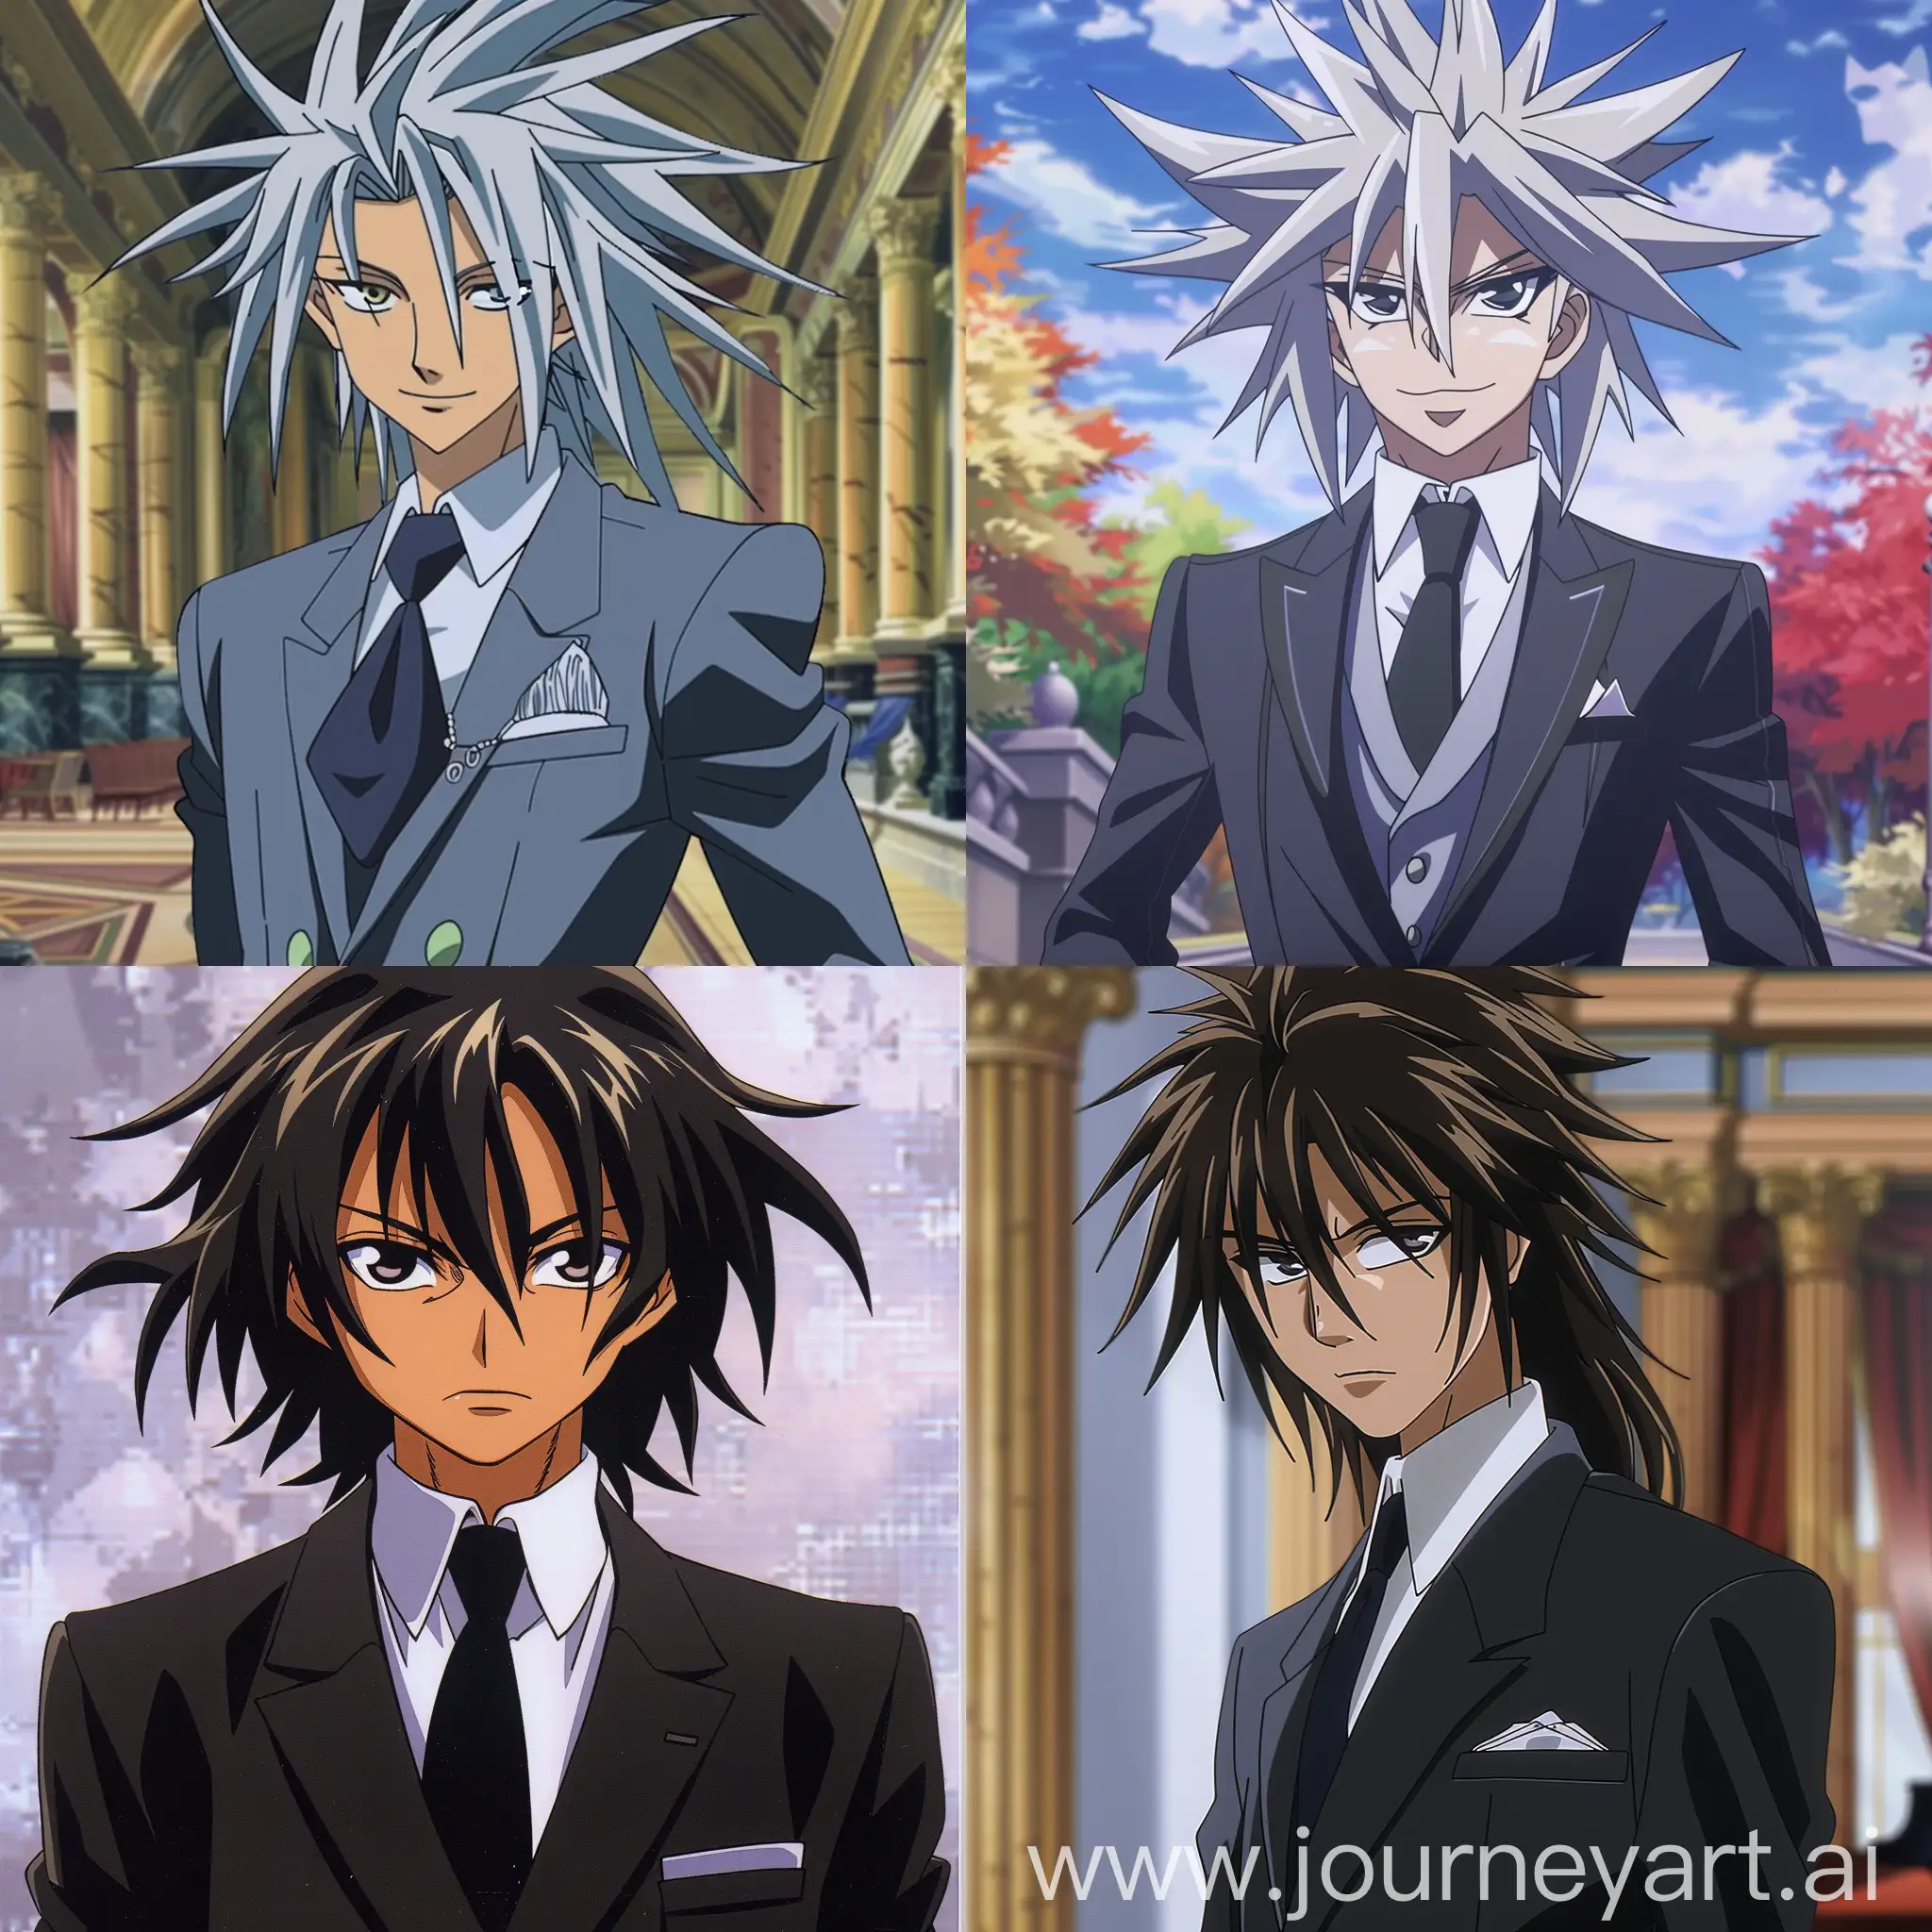 Yoh-Asakura-Shaman-King-Anime-Character-in-Formal-Suit-Portrait